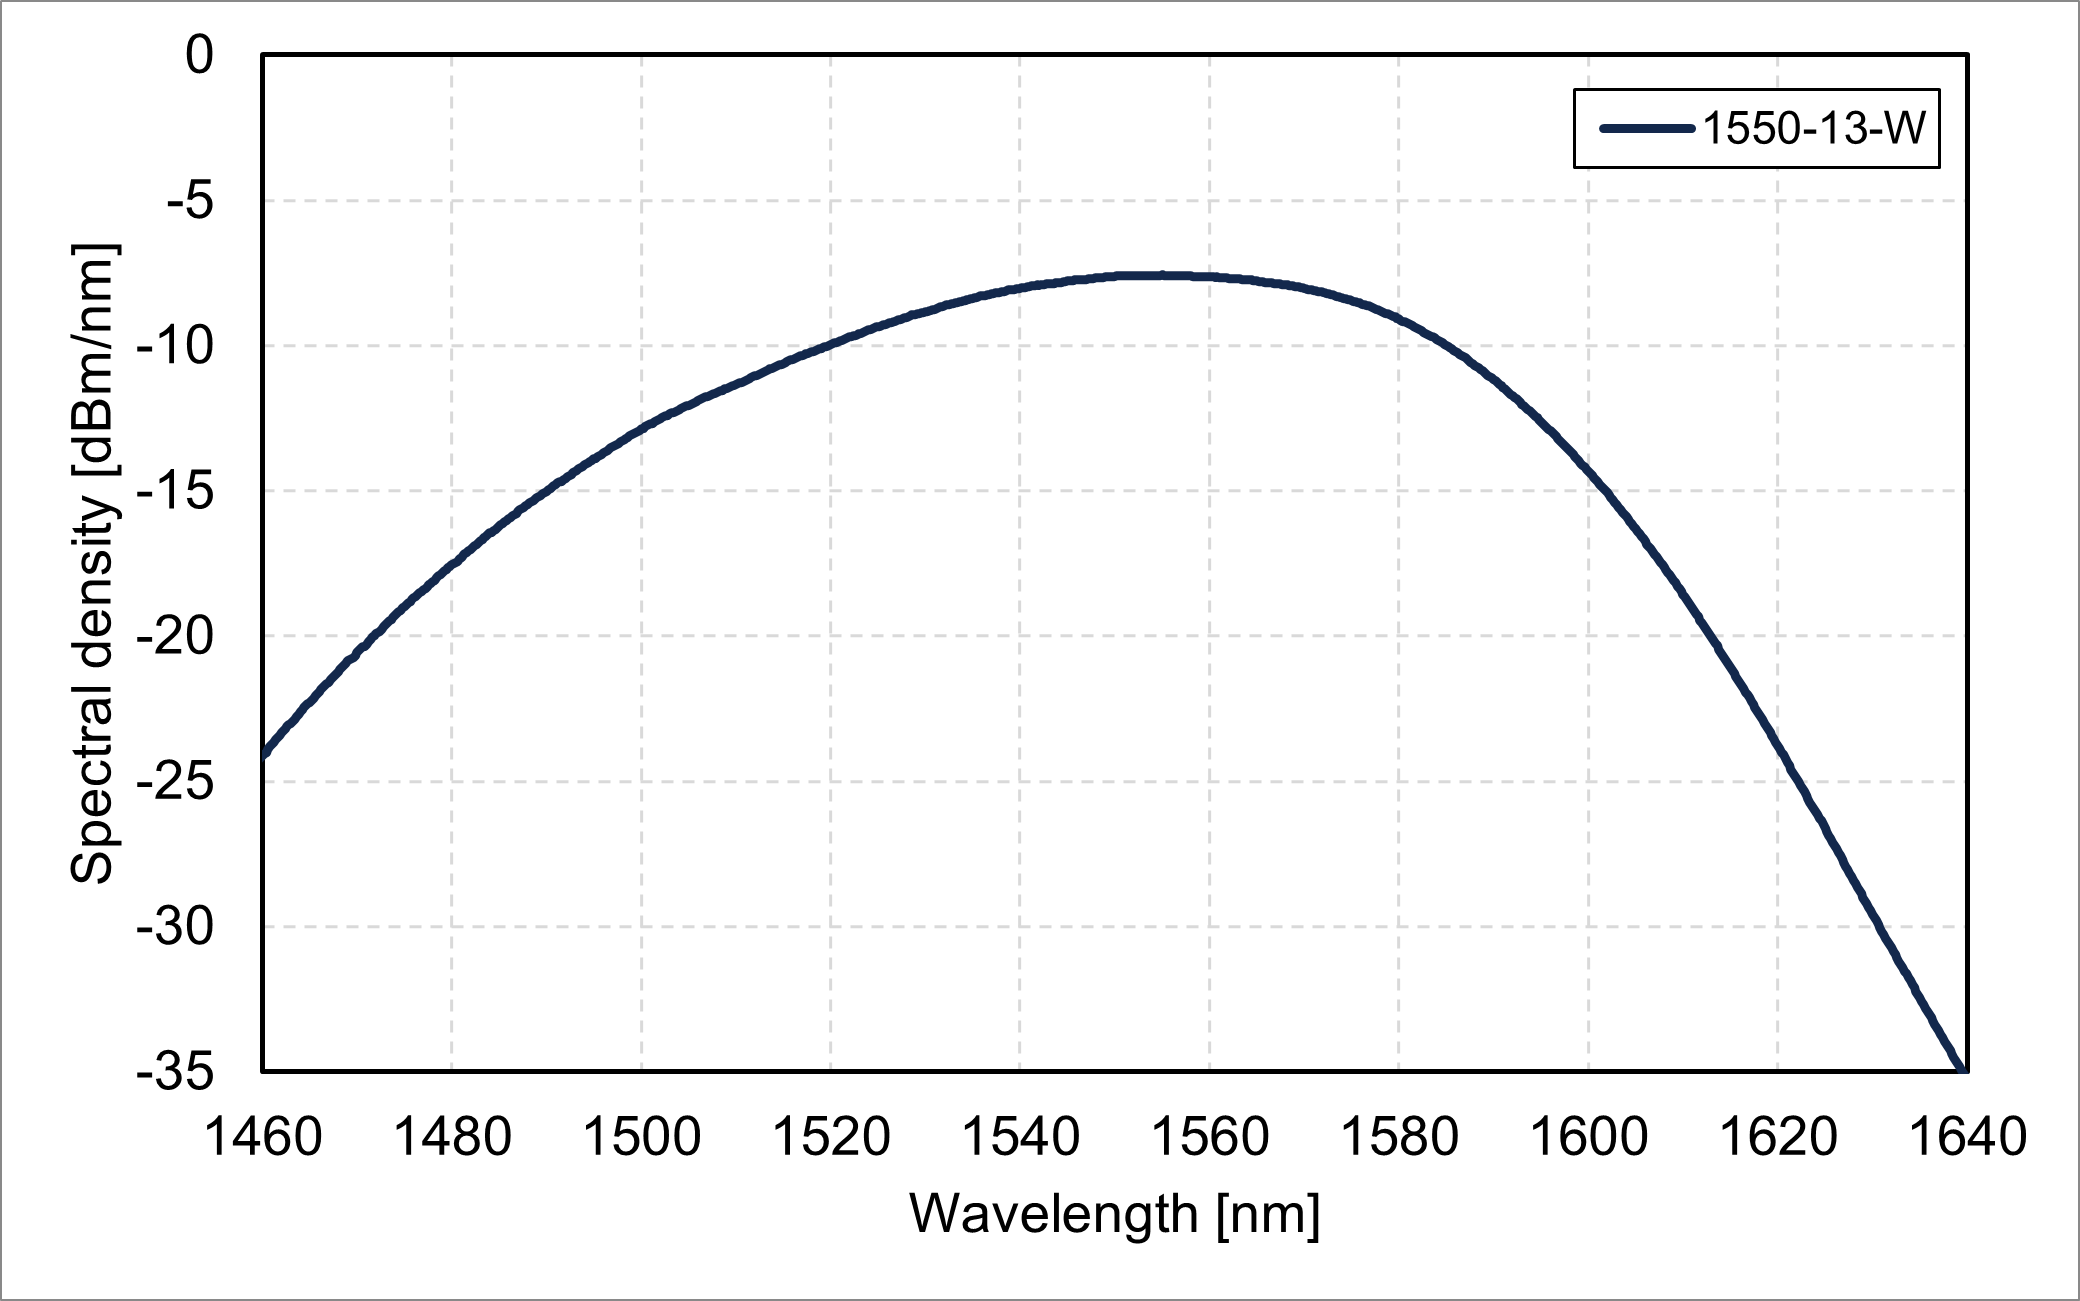 Spectral density vs. wavelength (1550-13-W)